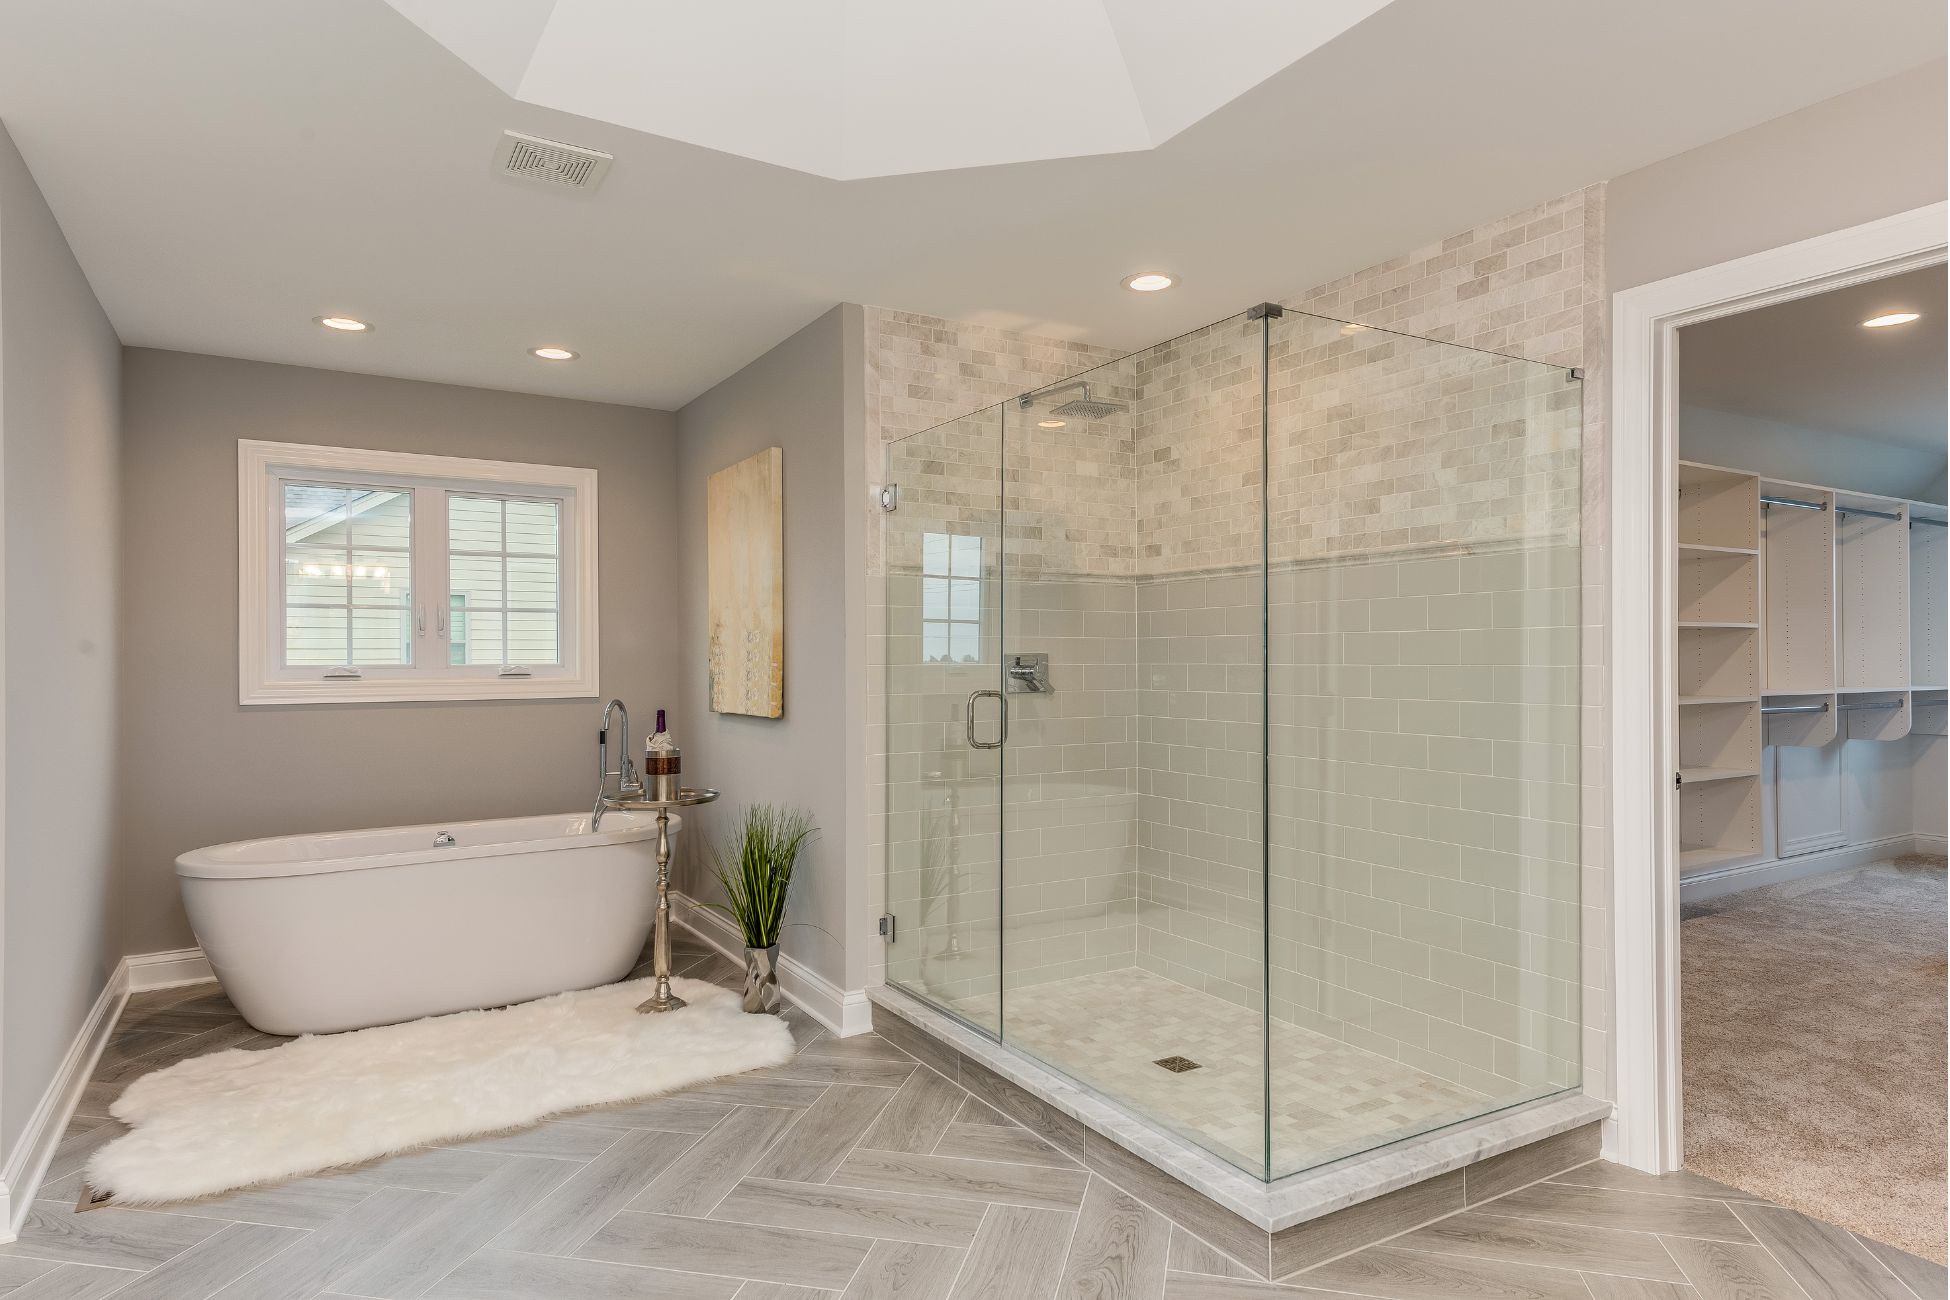 Spacious white bathroom with waterfall shower and bath tub